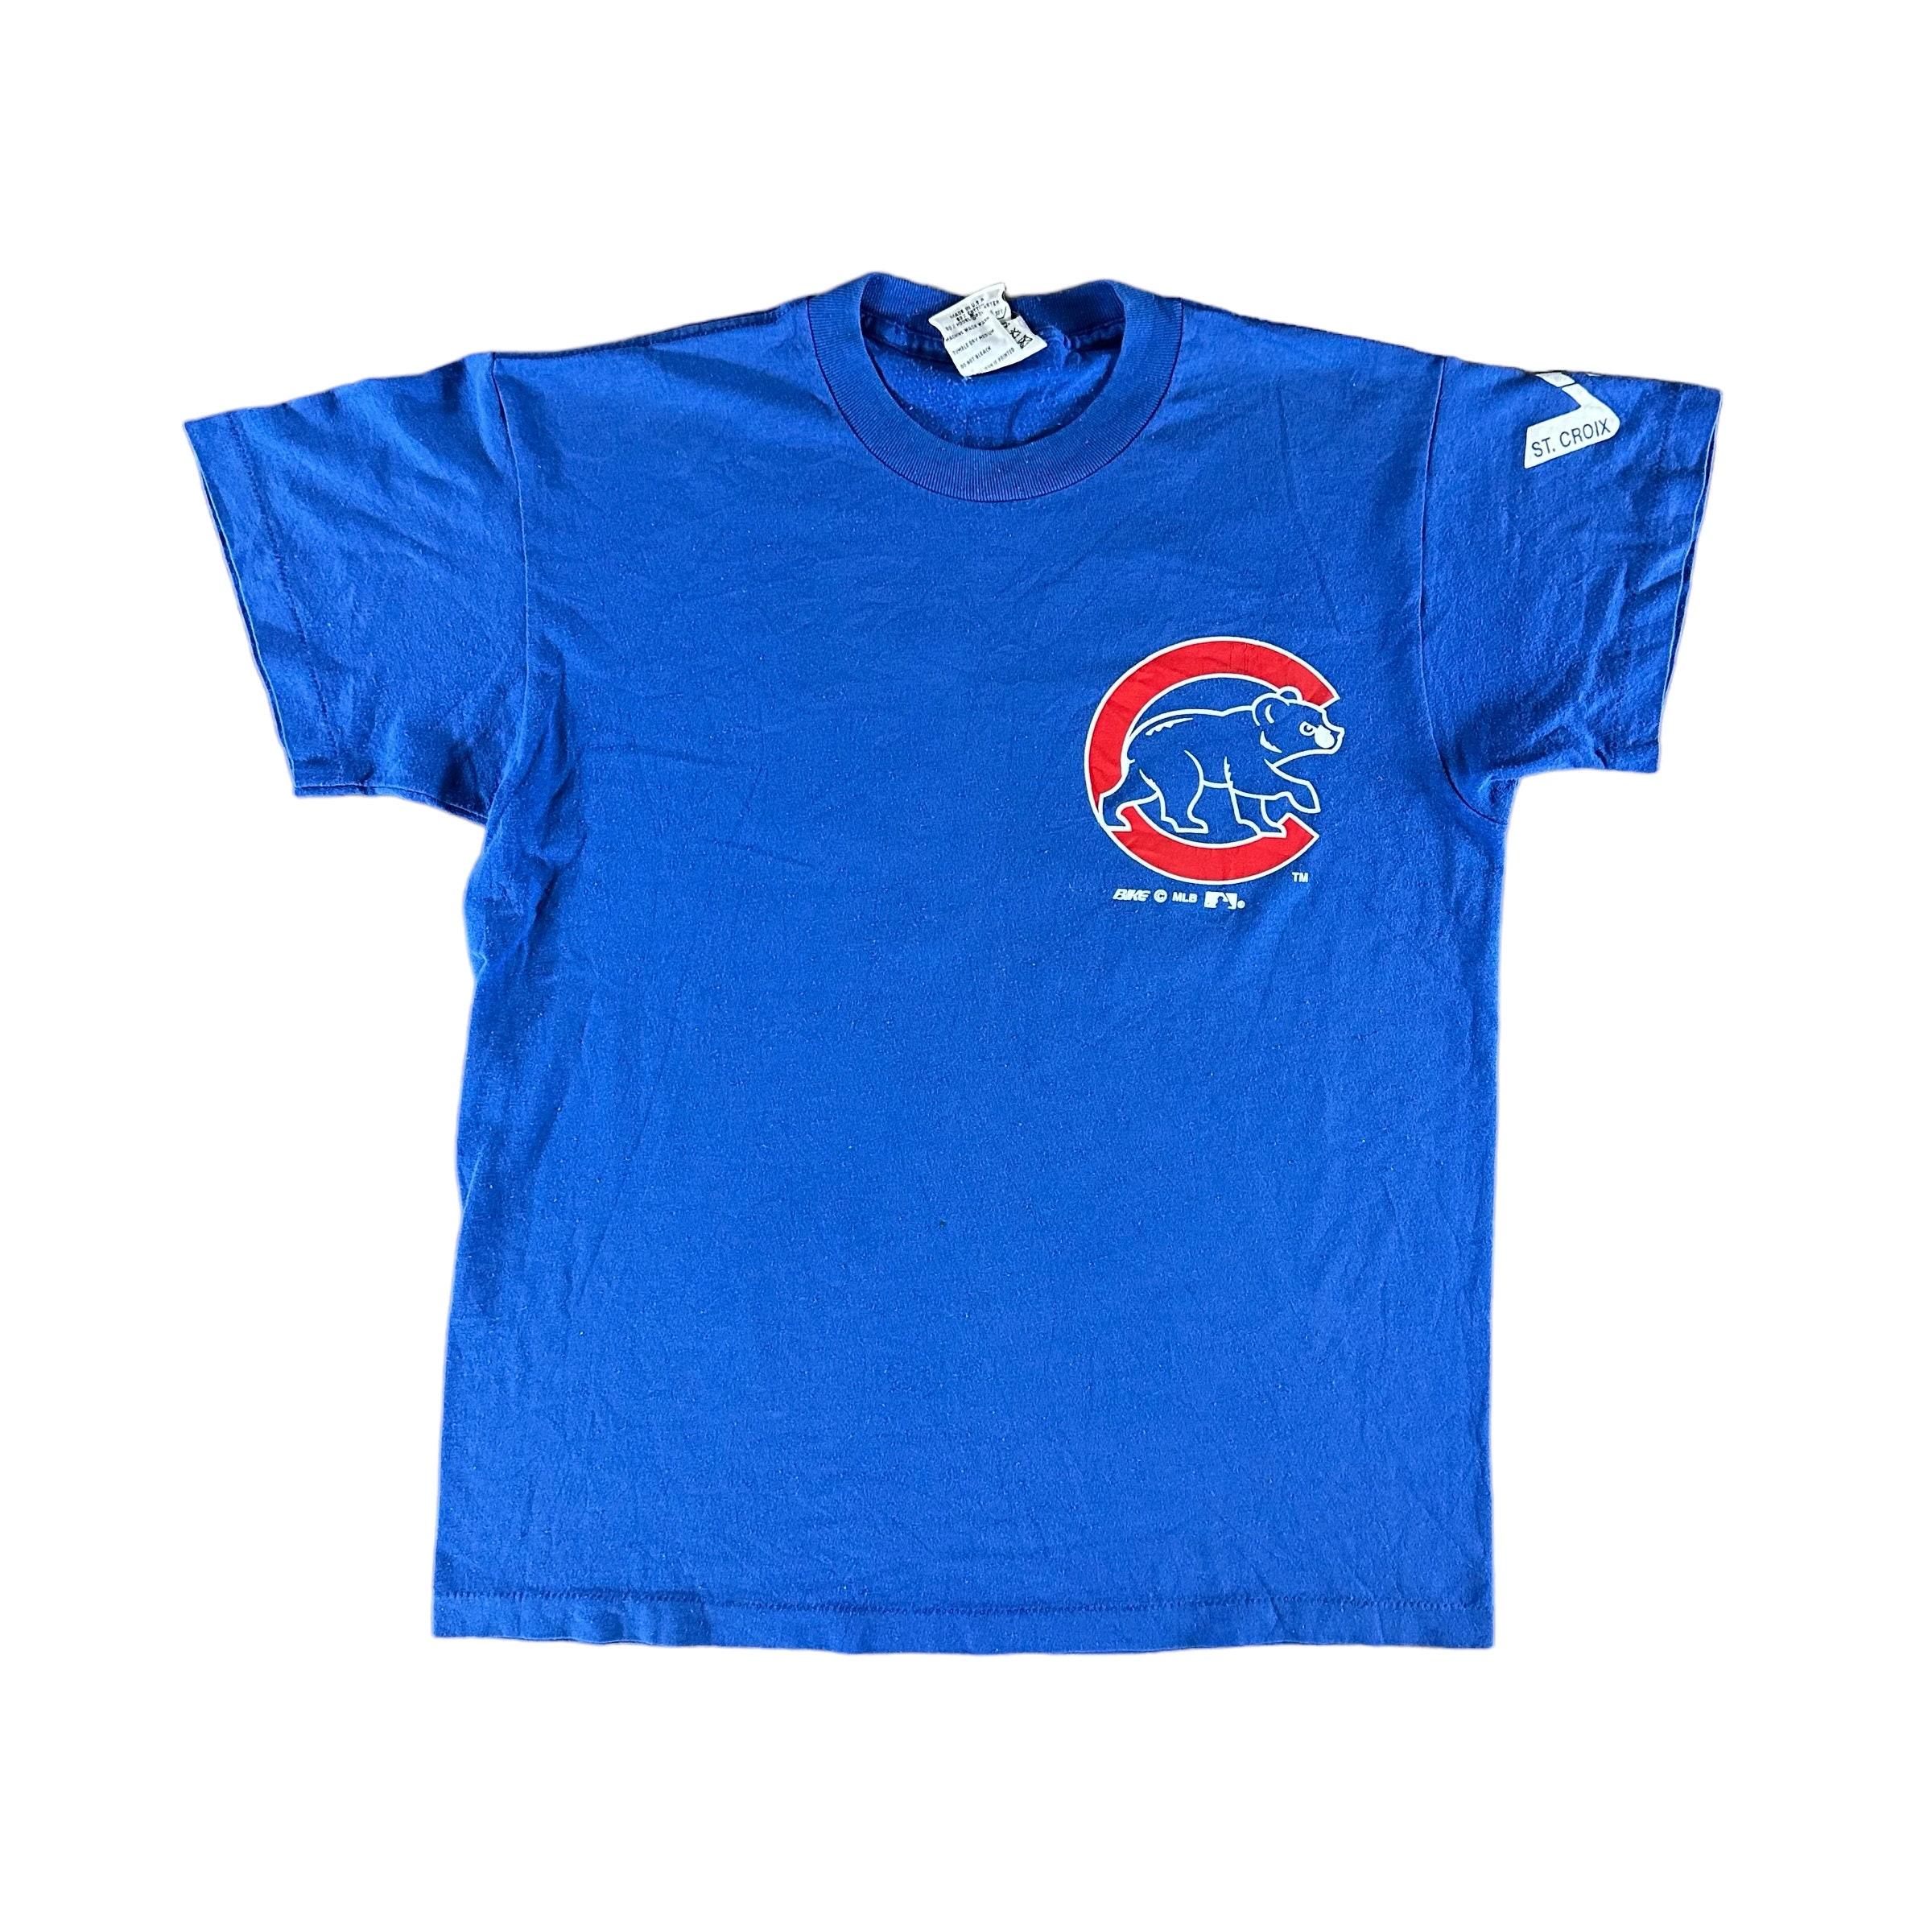 Chicago Cubs 1916 Throwback Jersey / Shirt XL X-Large - Ideal Promo -  Match-Up